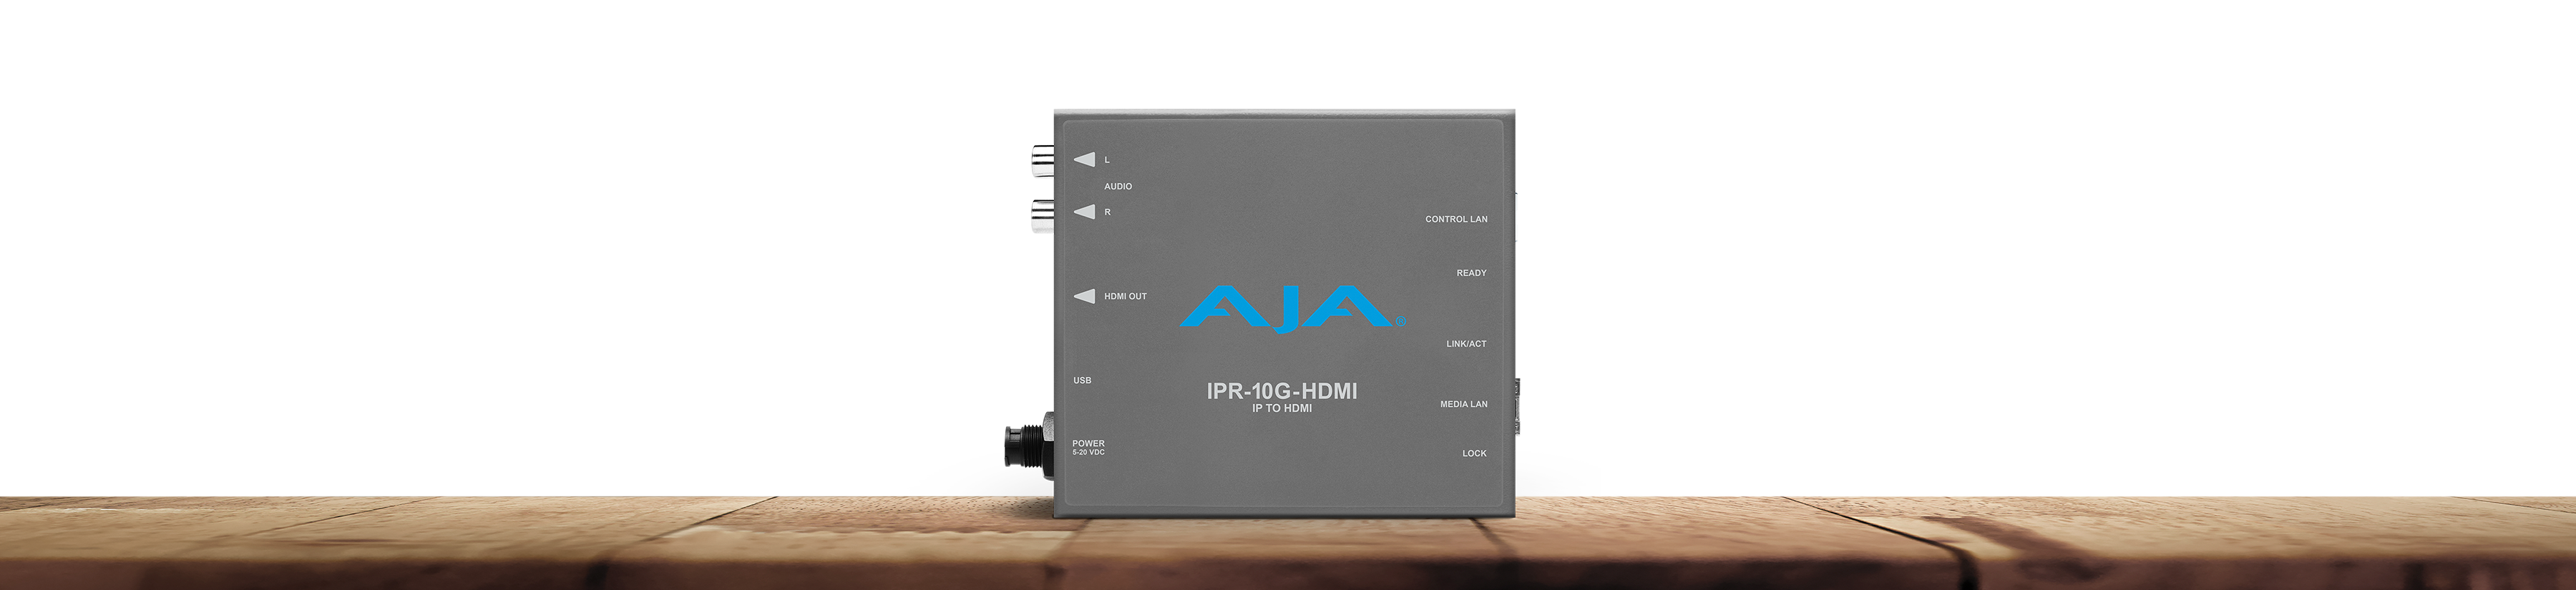 IPR-10G-HDMI